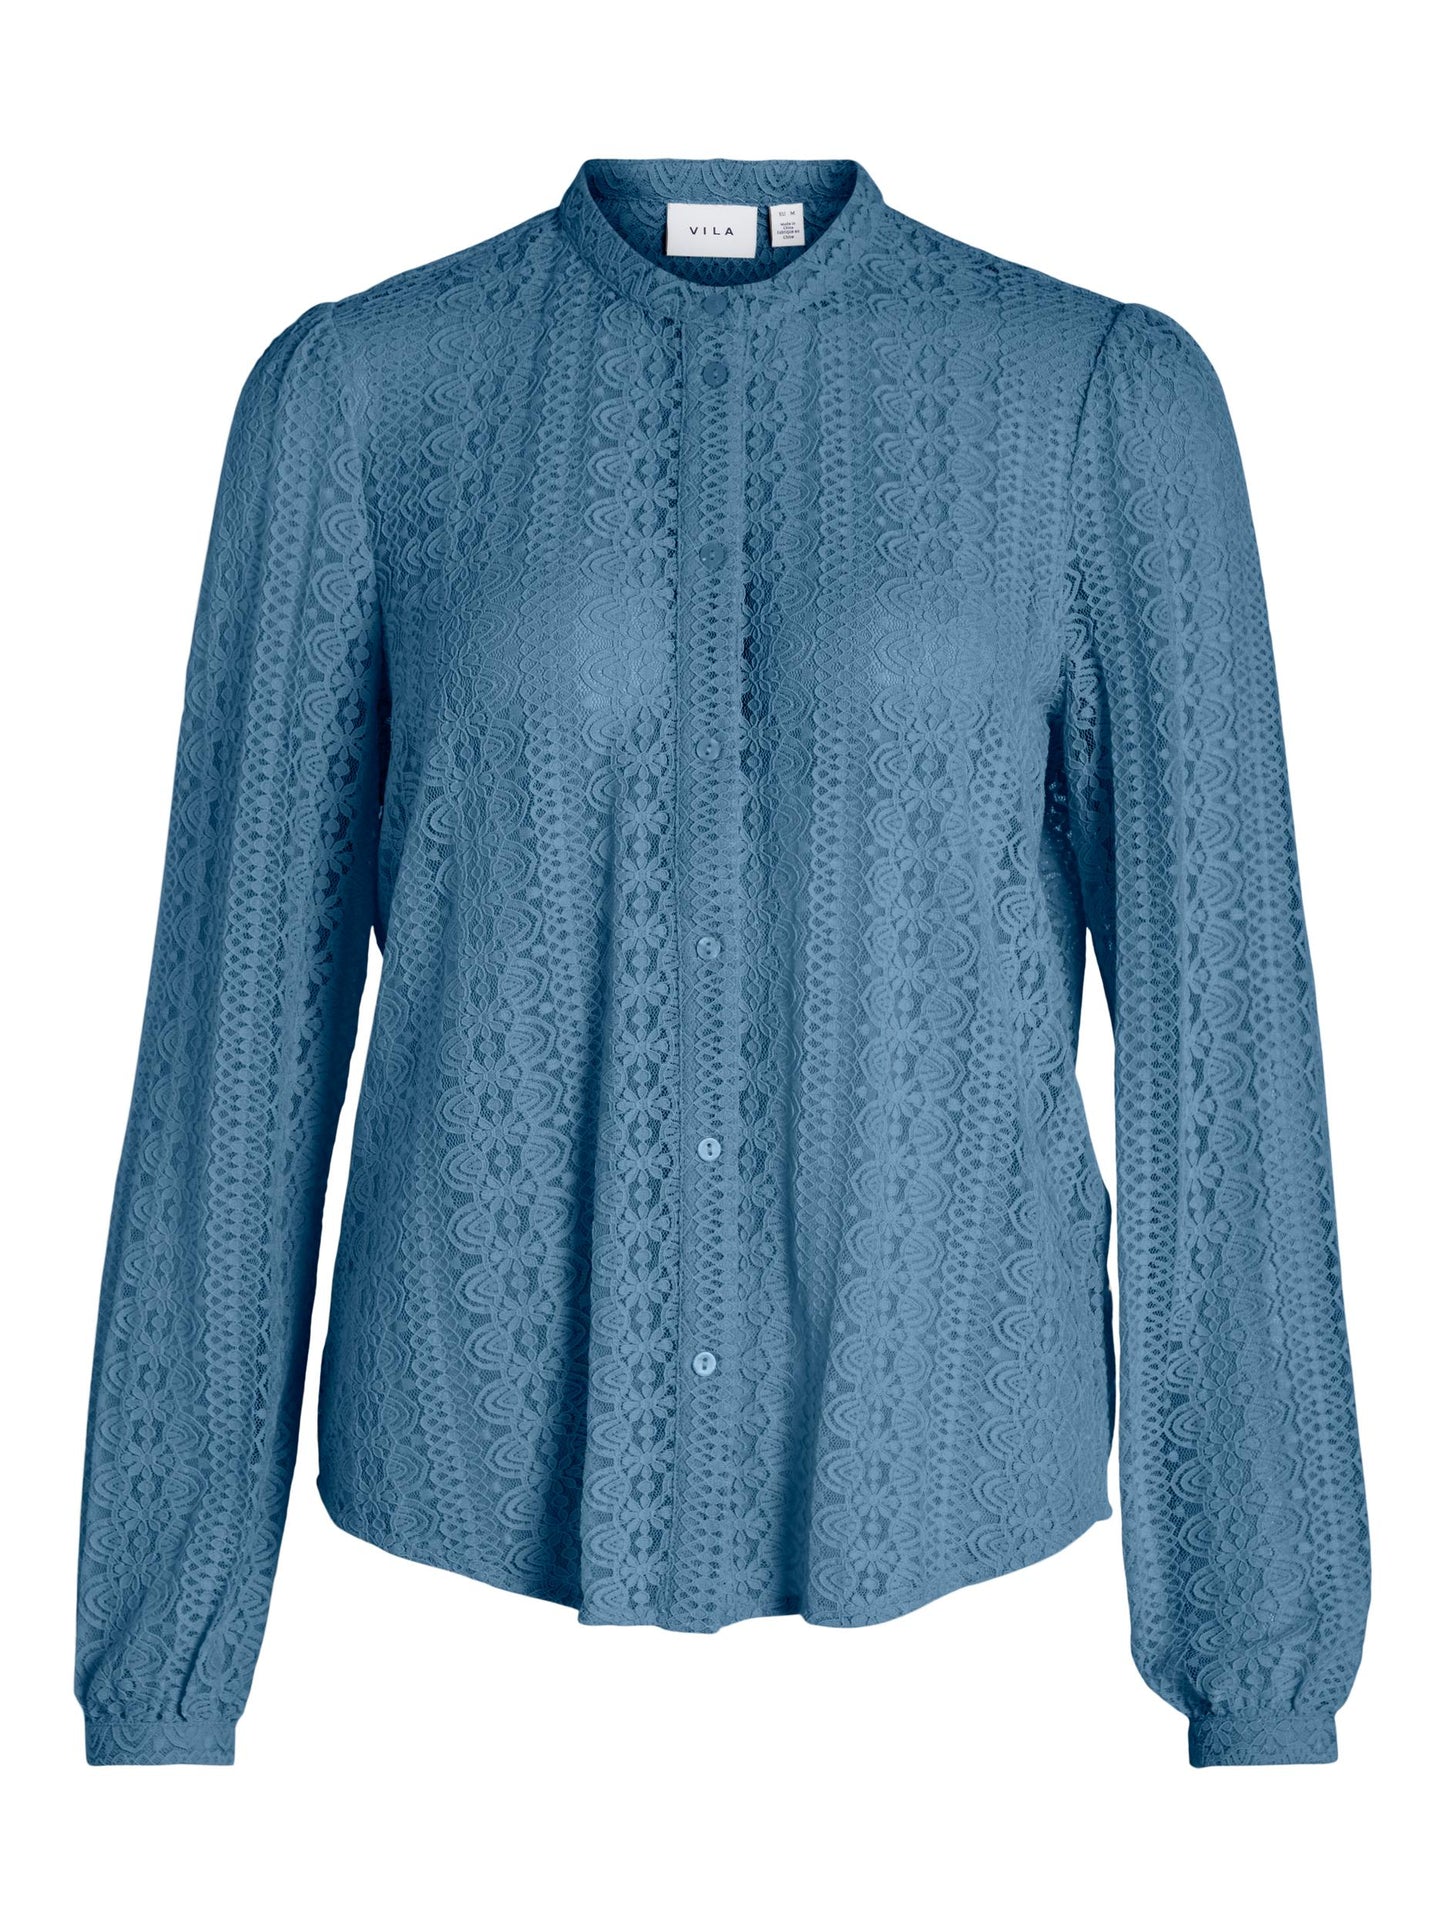 Vila Vichikka lace shirt 14082977 Coronet Blue